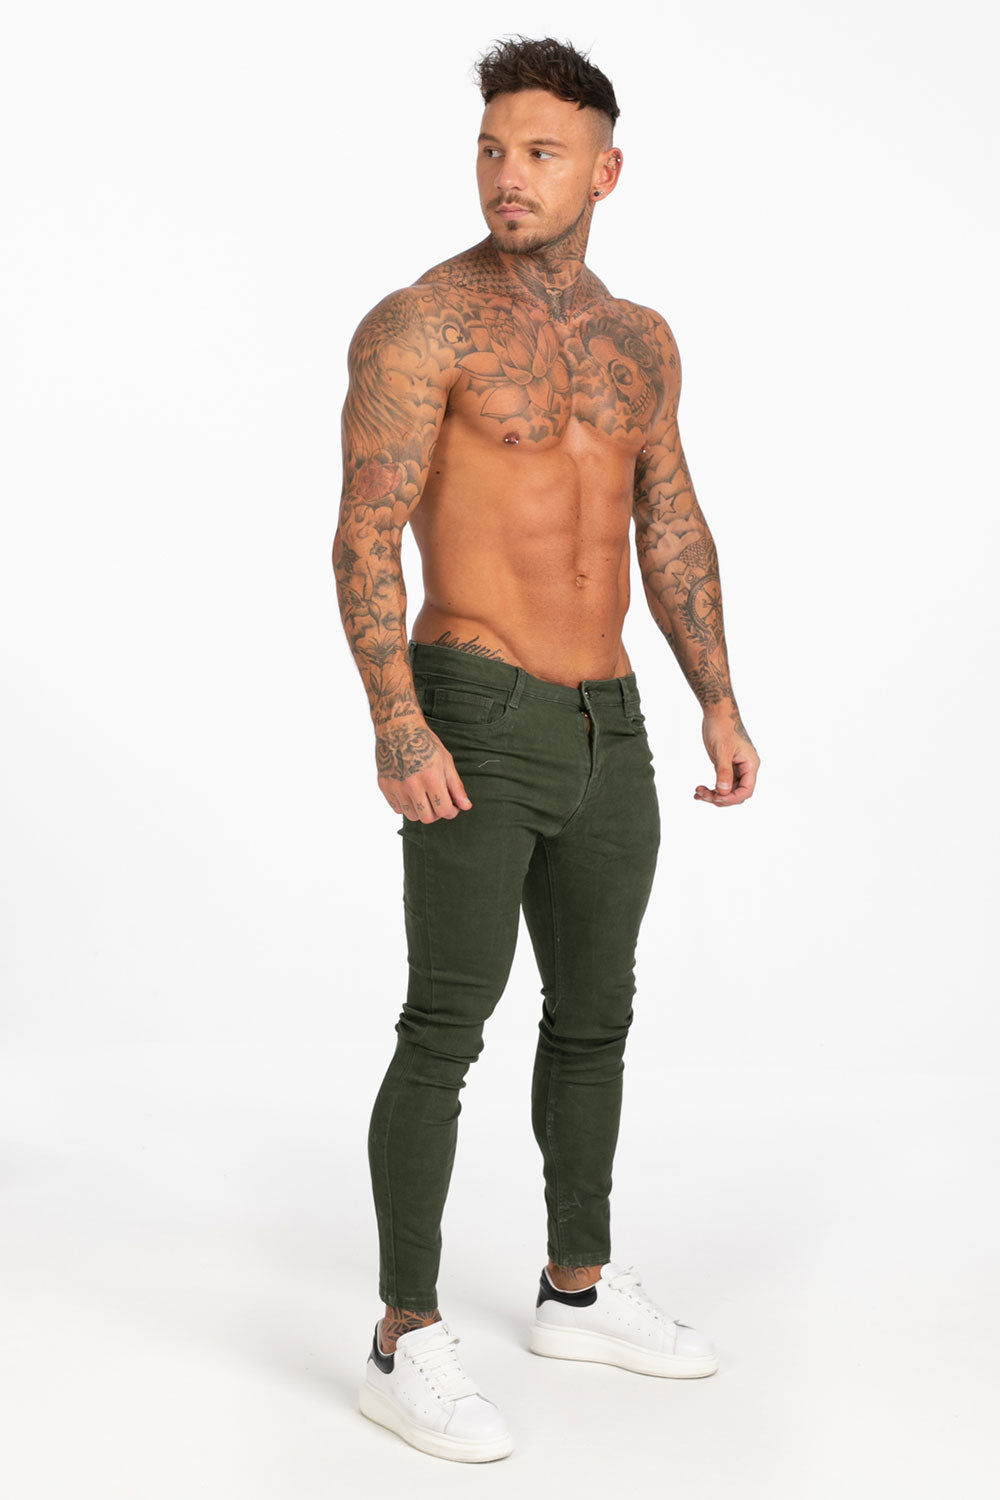 men's green skinny jeans